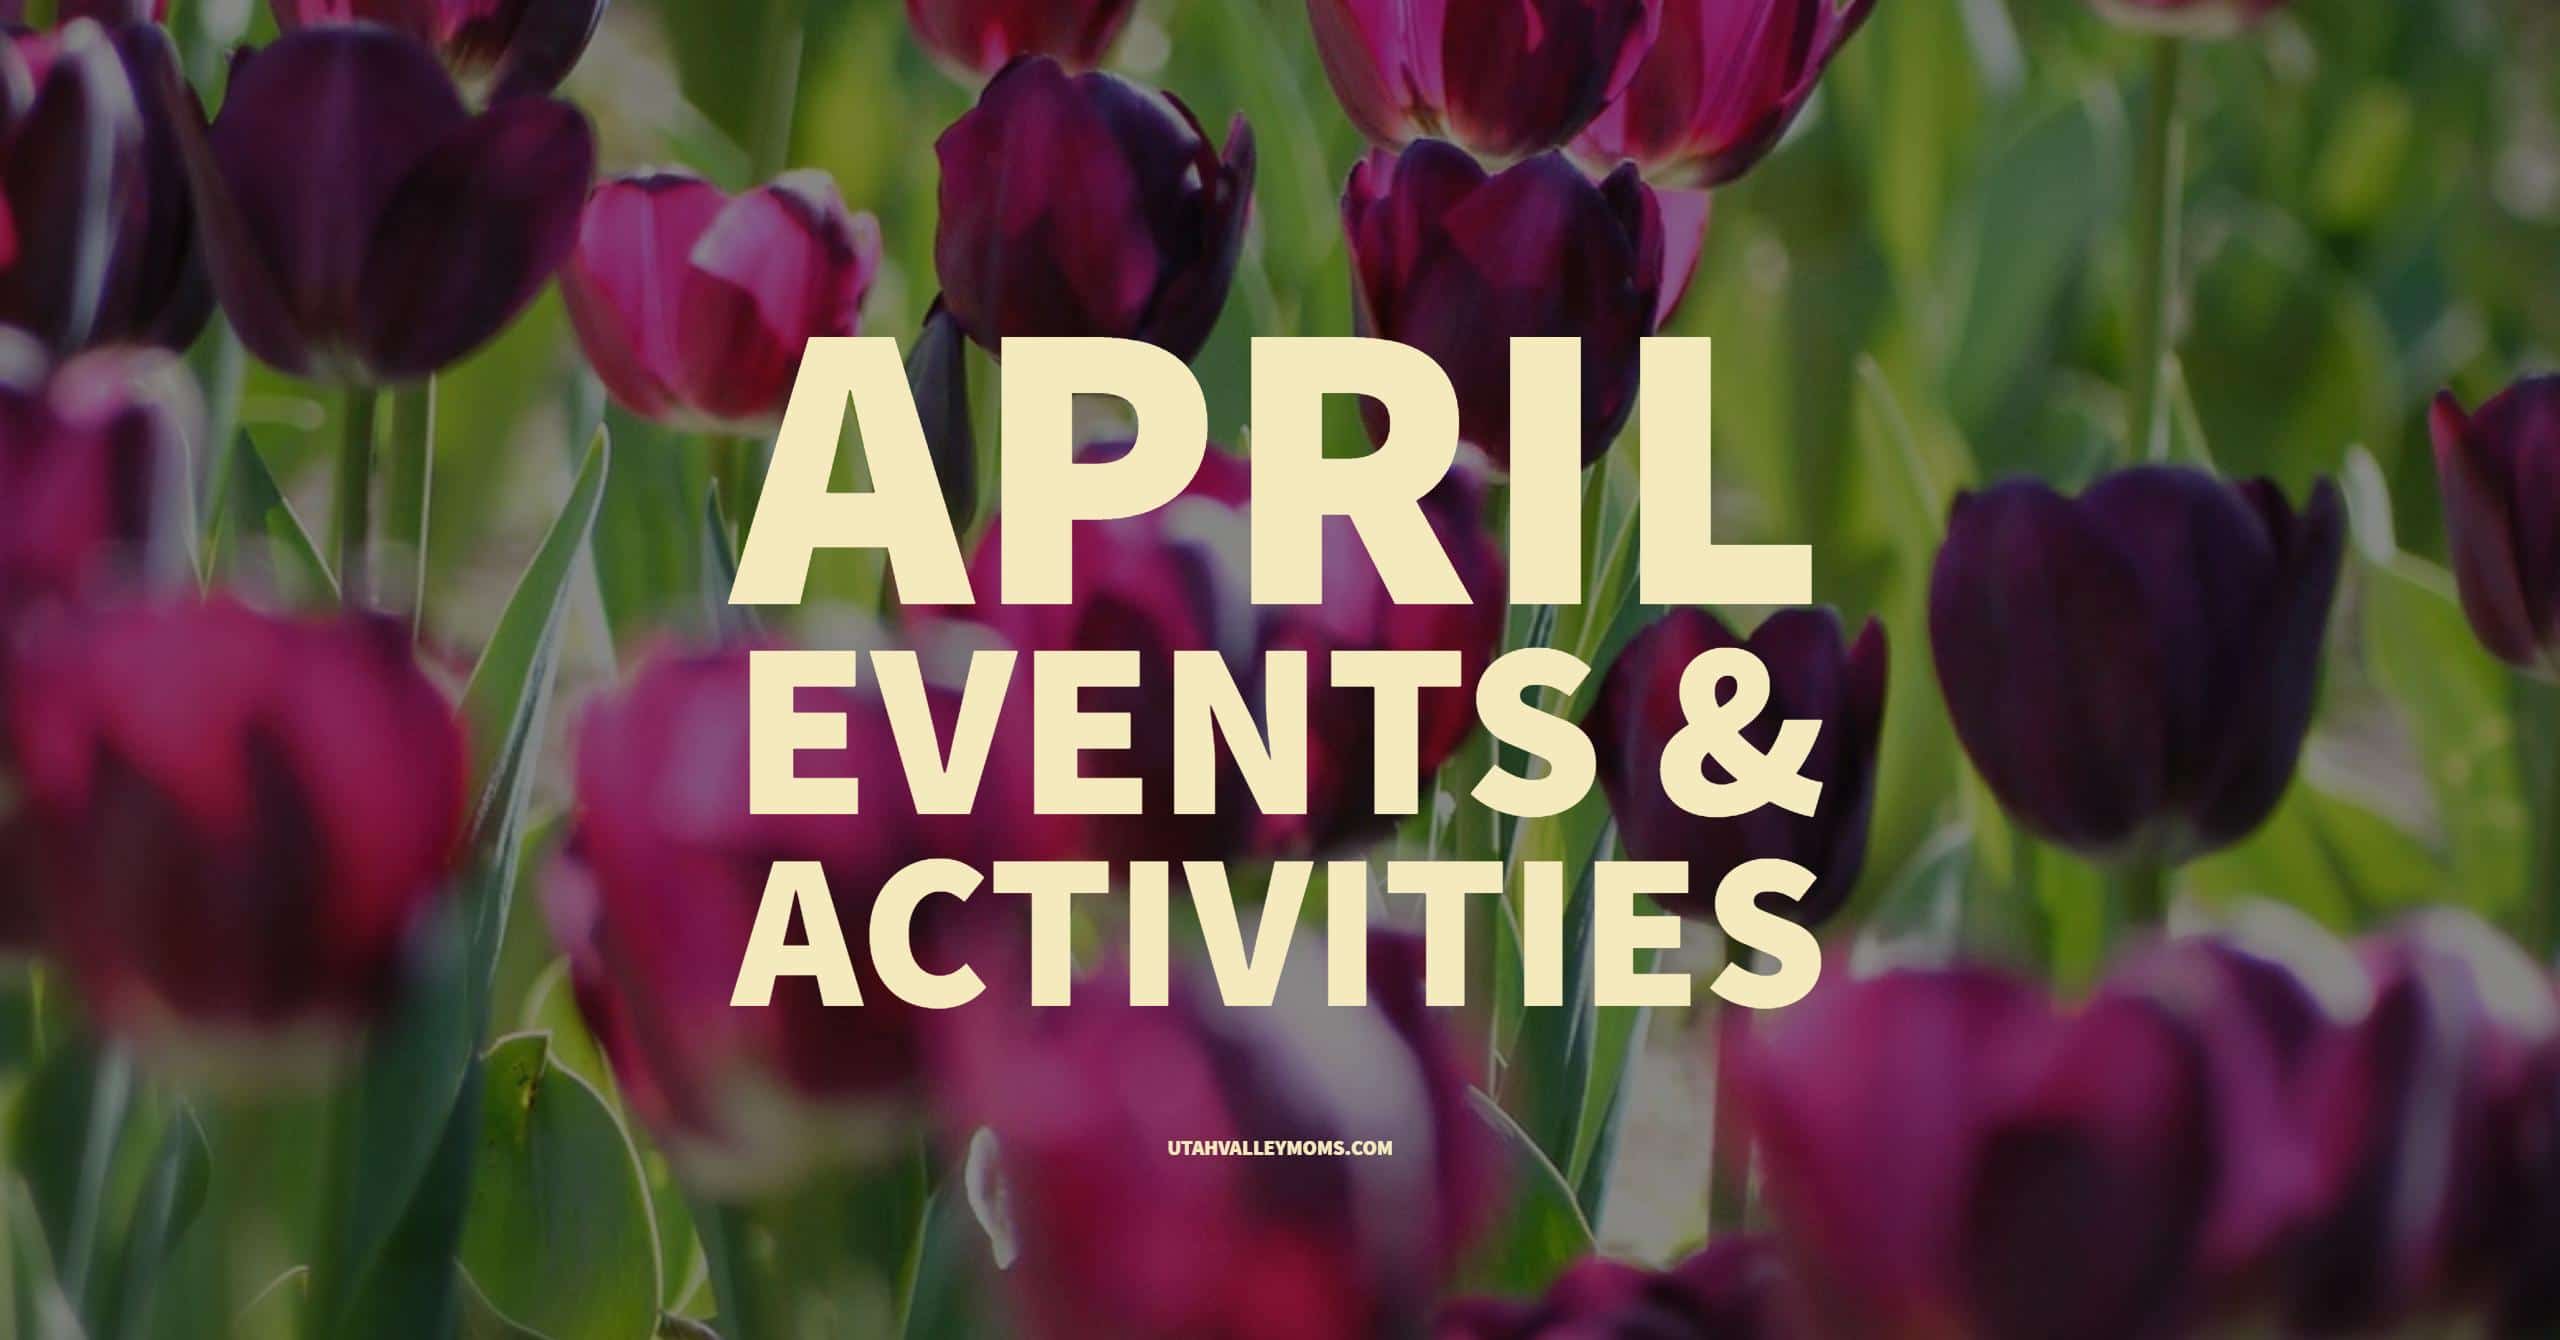 April Utah County Events + Activities 2017 • Utah Valley Moms